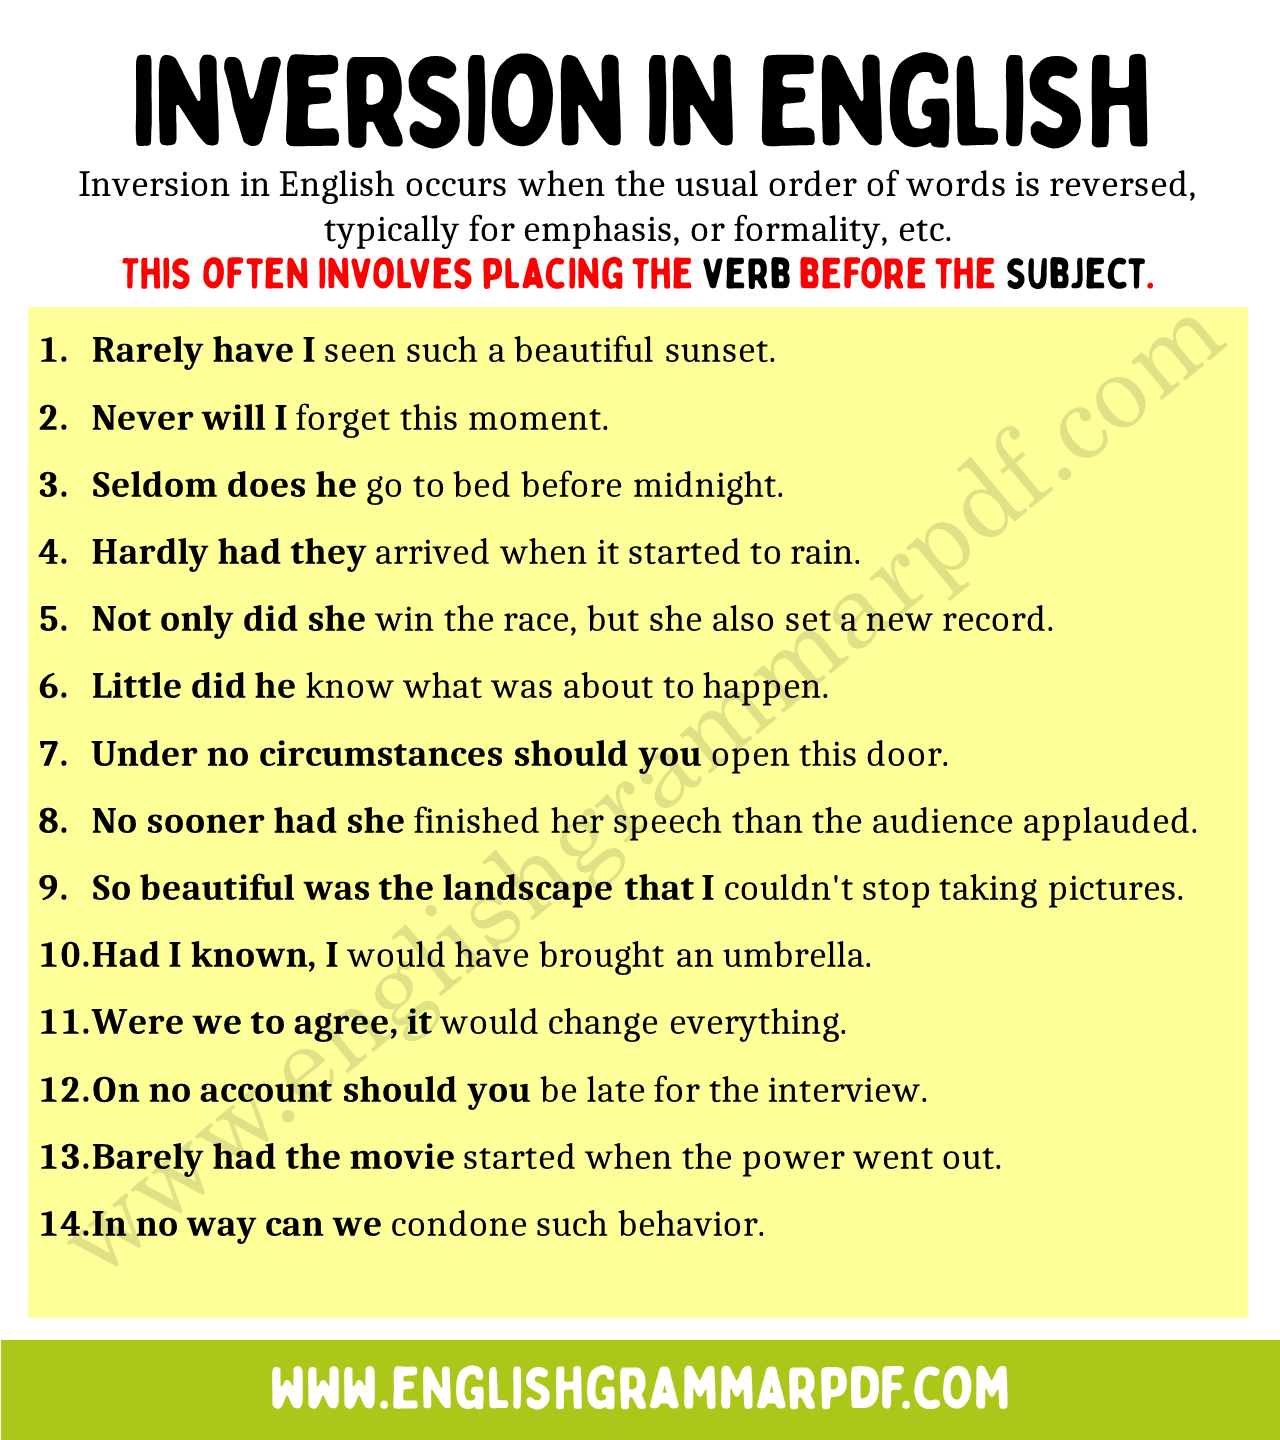 Inversion in English